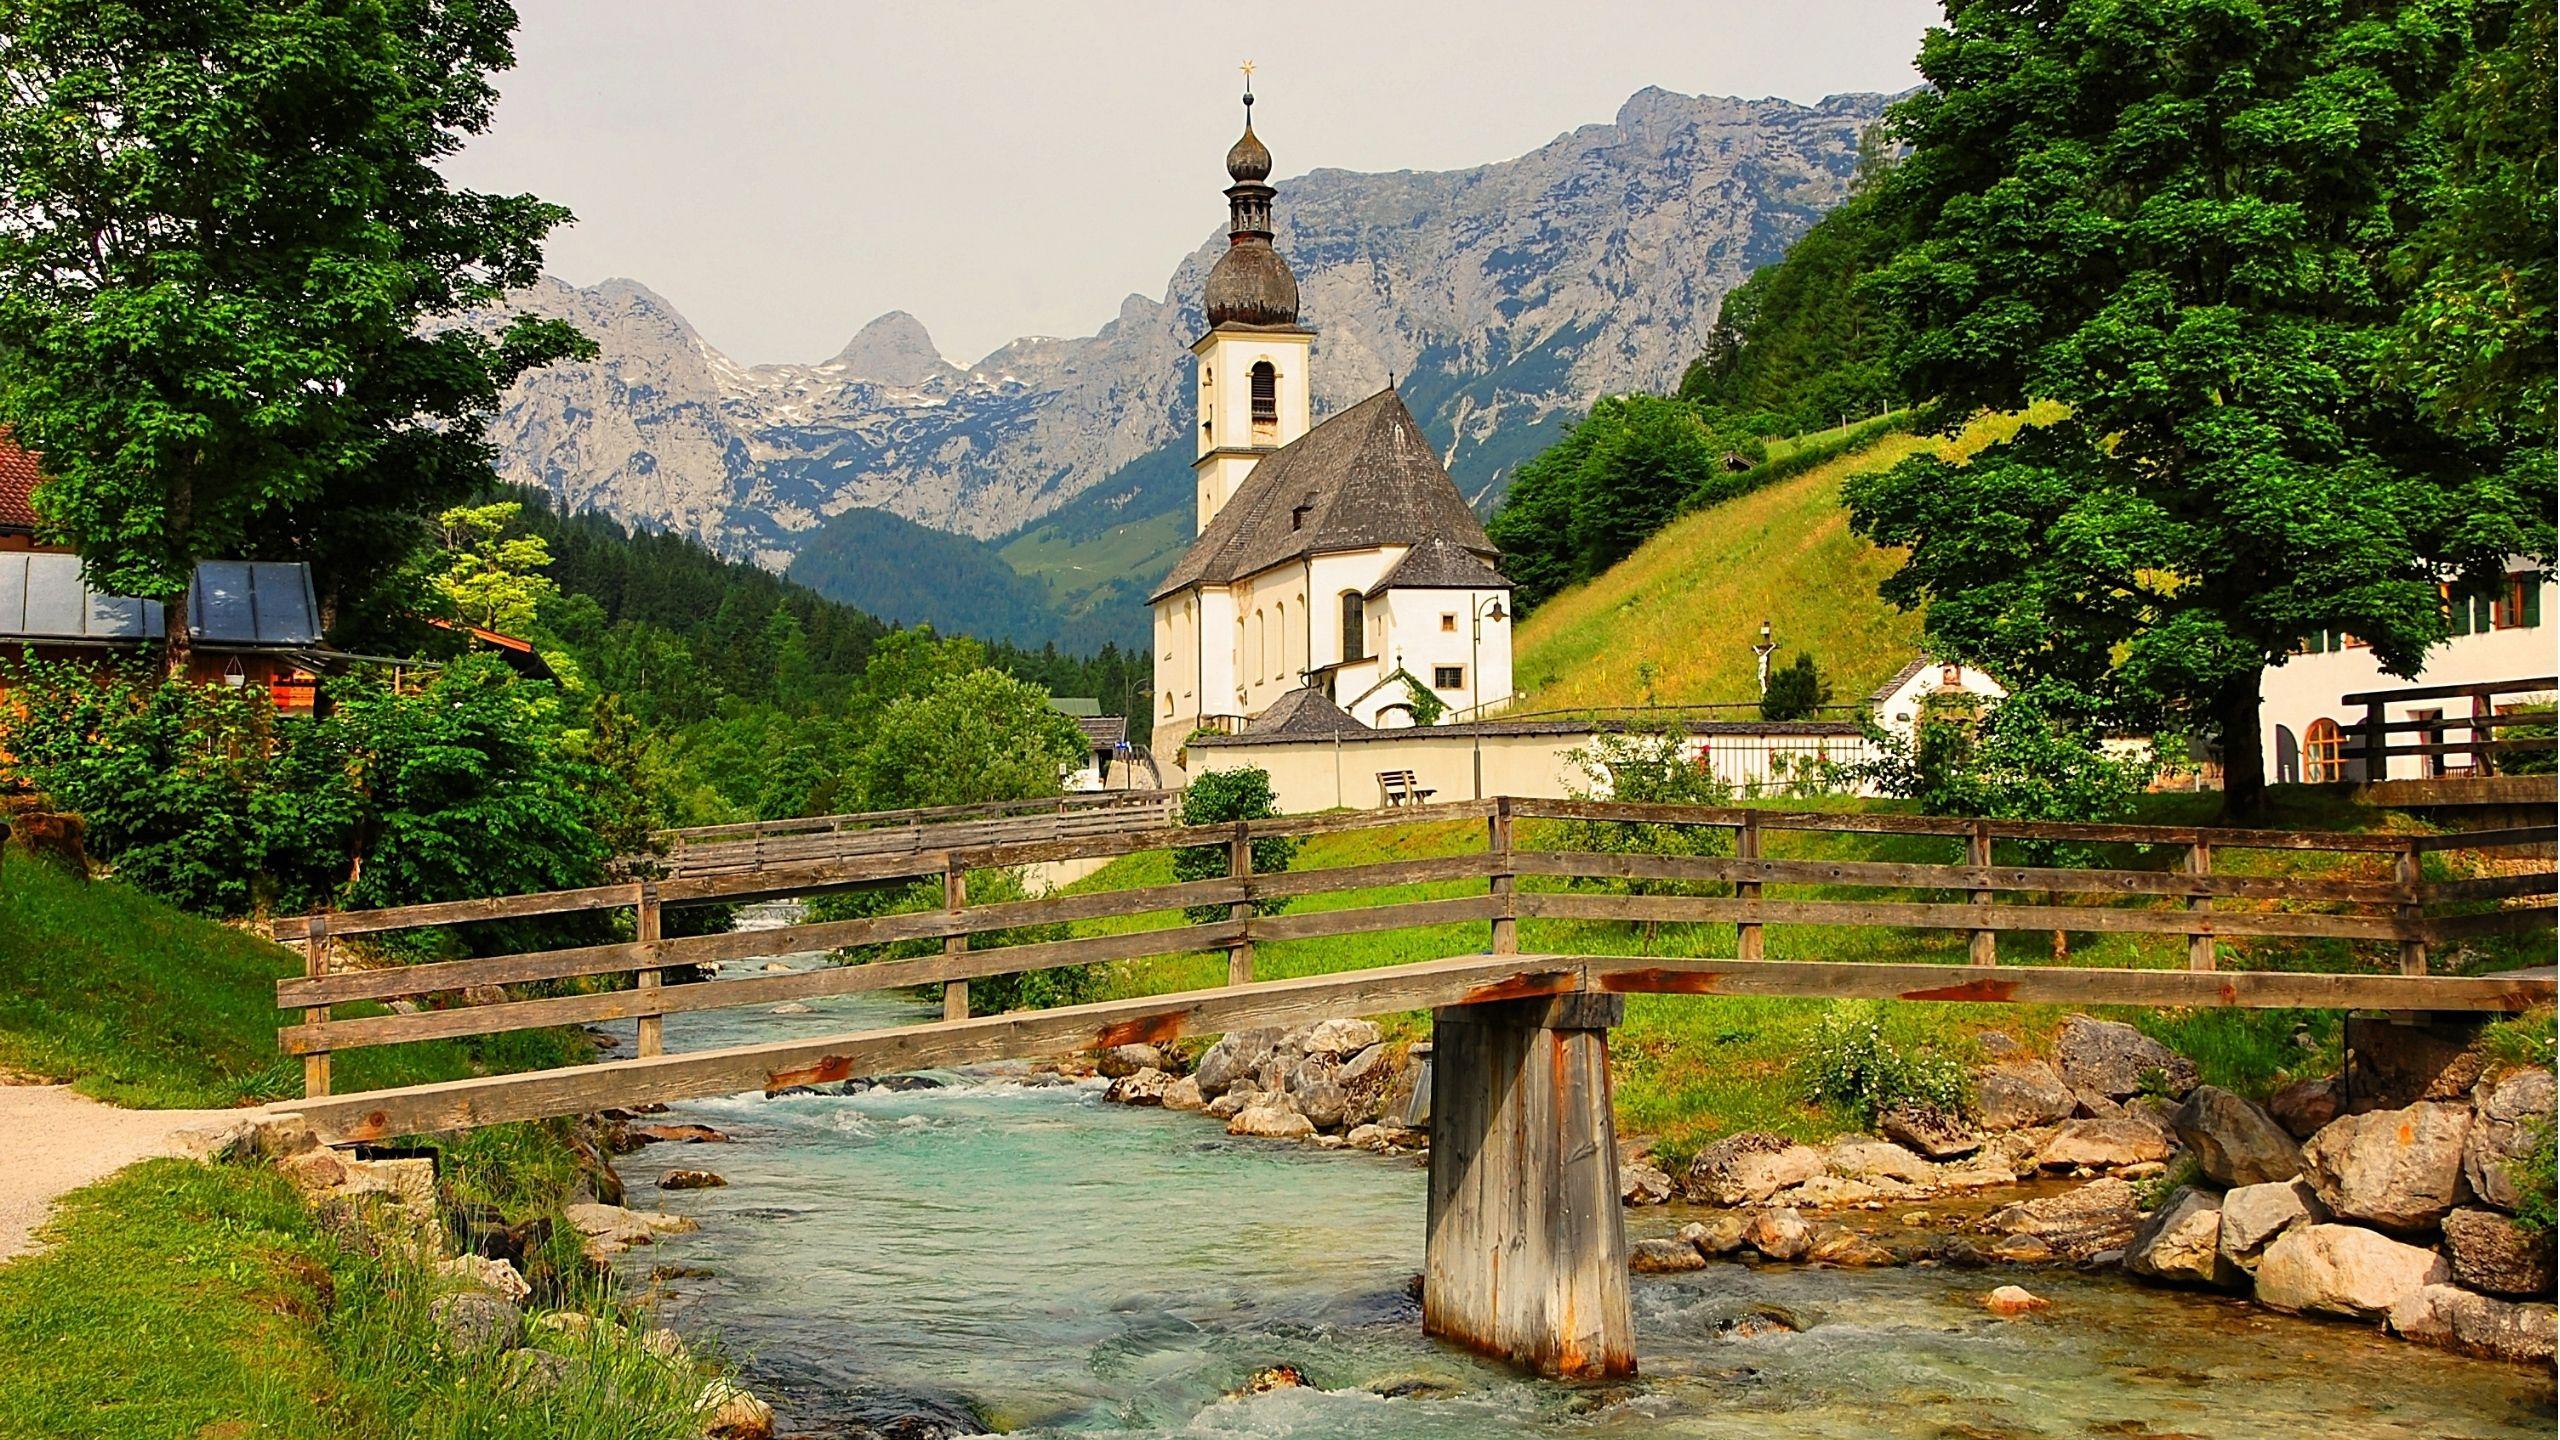 Church and Bridge in the Upper Bavaria, Germany